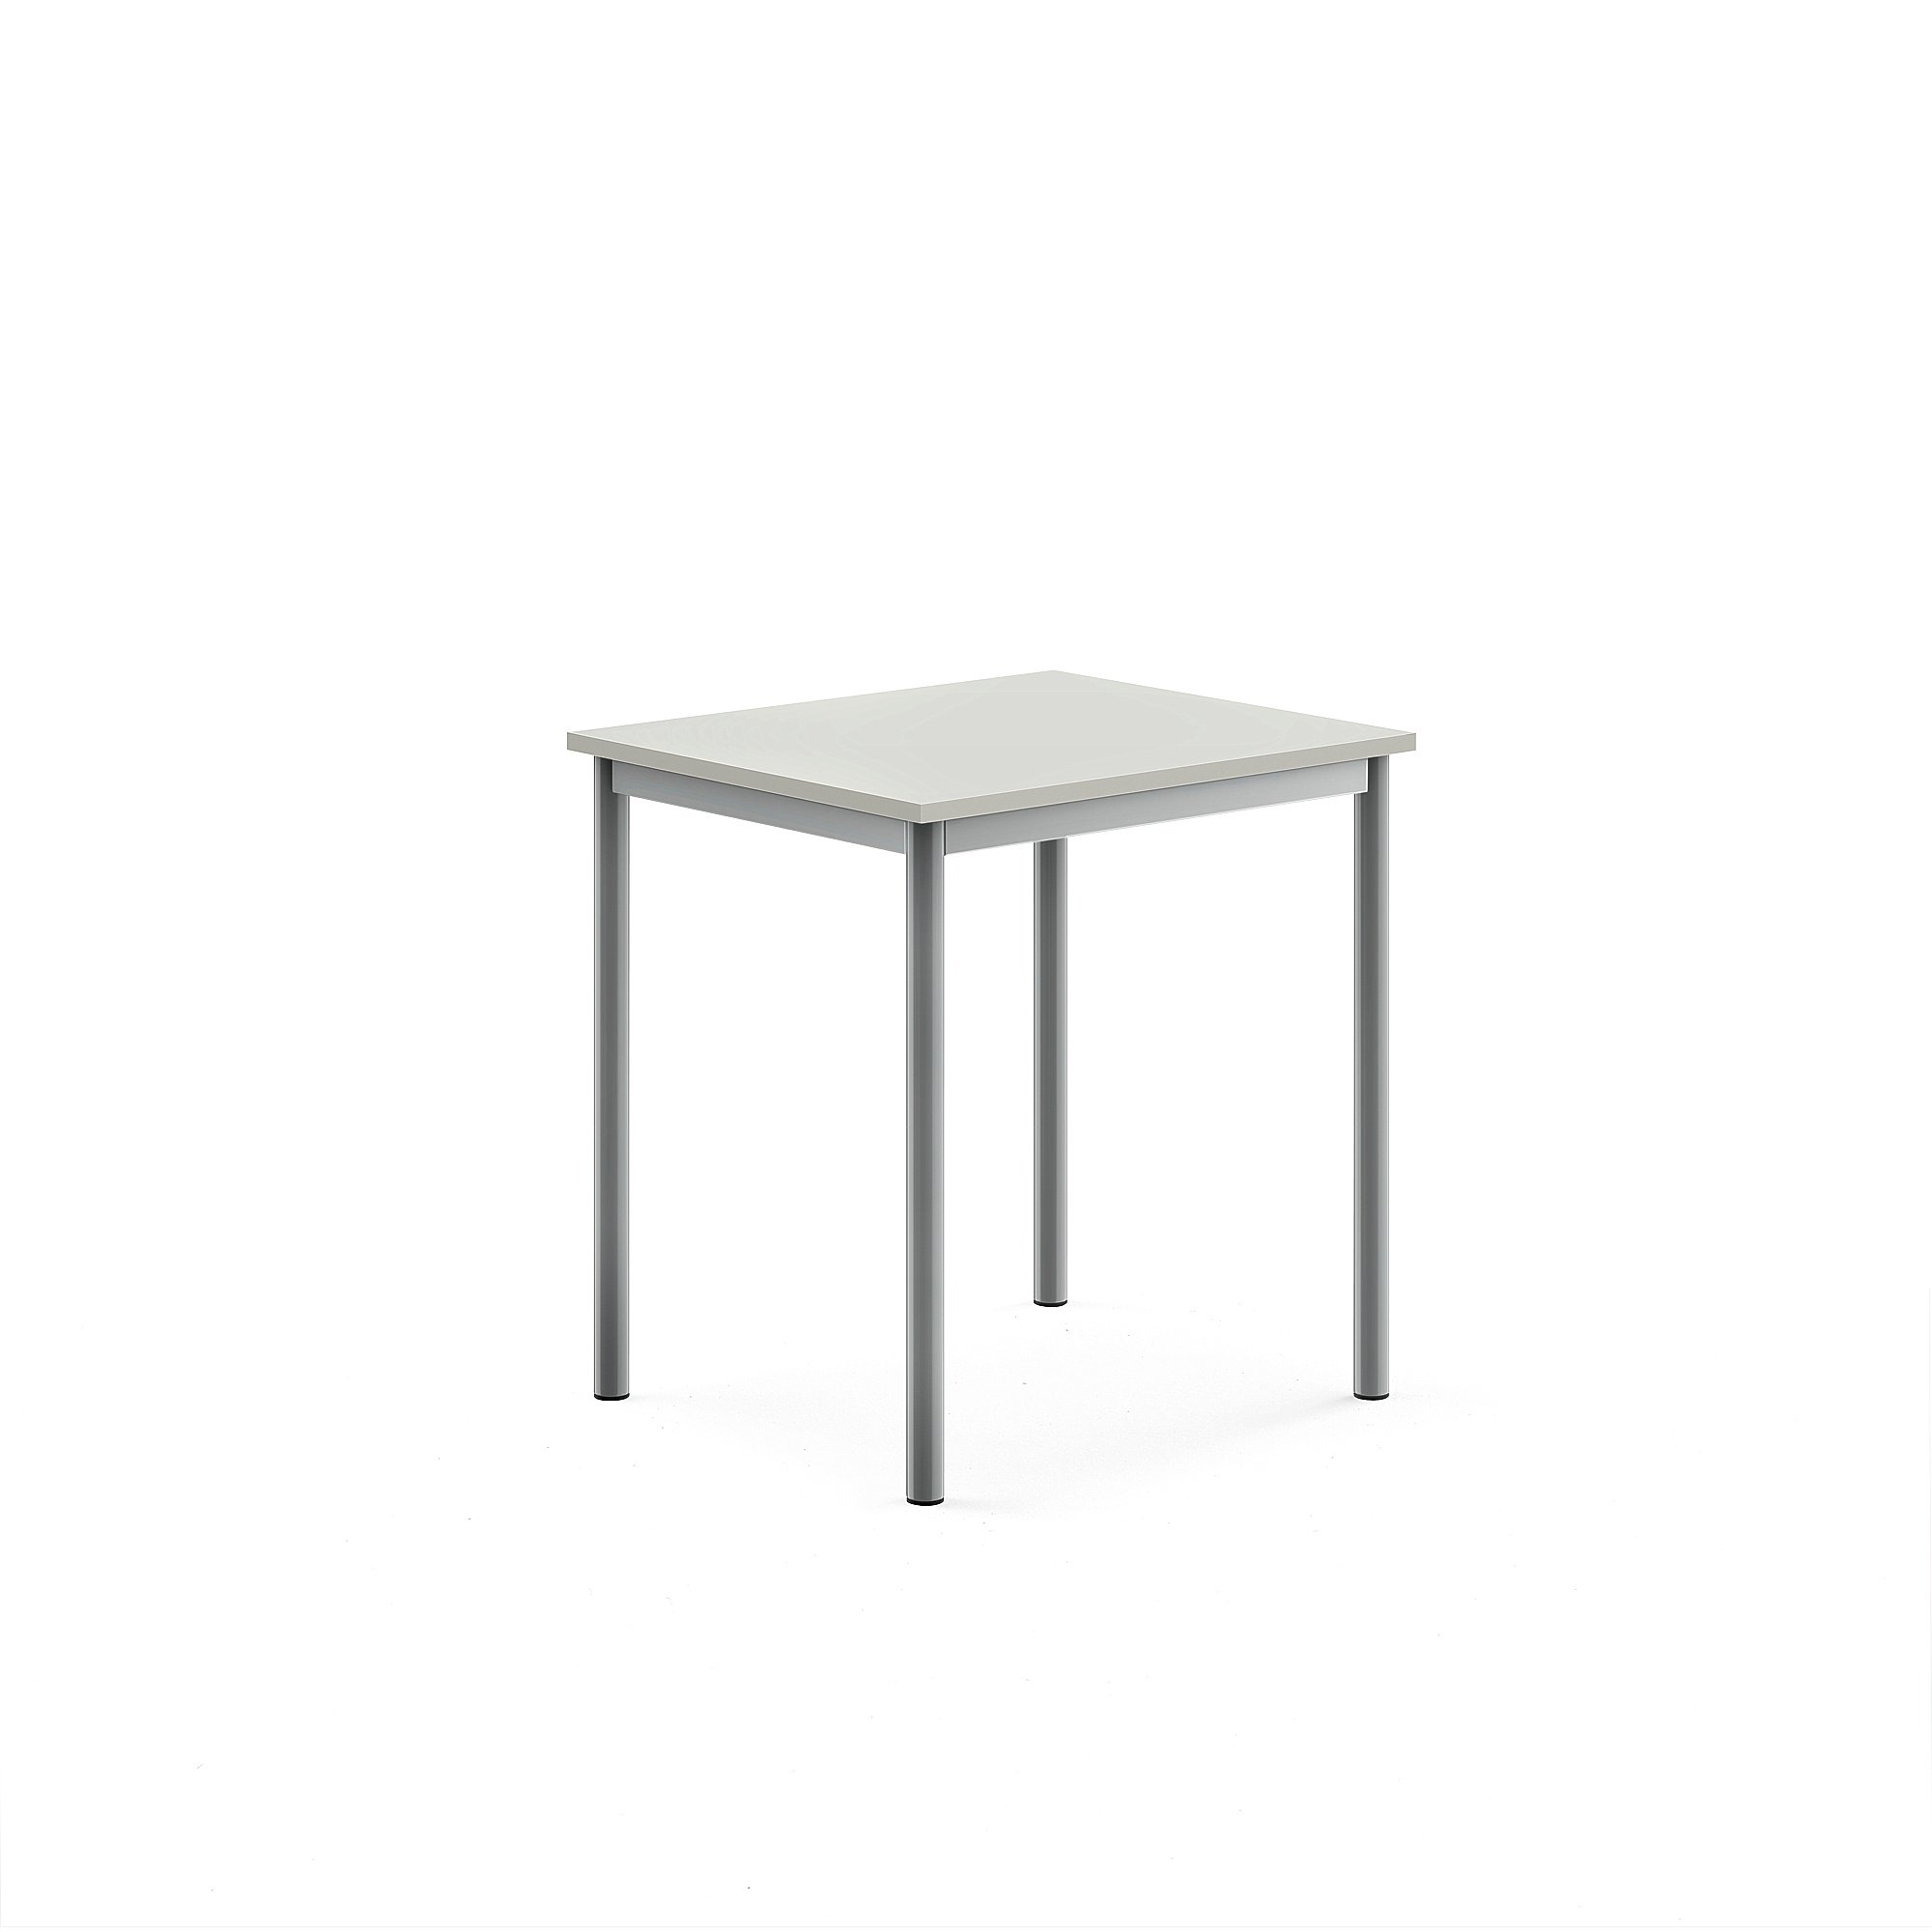 Stůl SONITUS, 700x600x720 mm, stříbrné nohy, HPL deska tlumící hluk, šedá